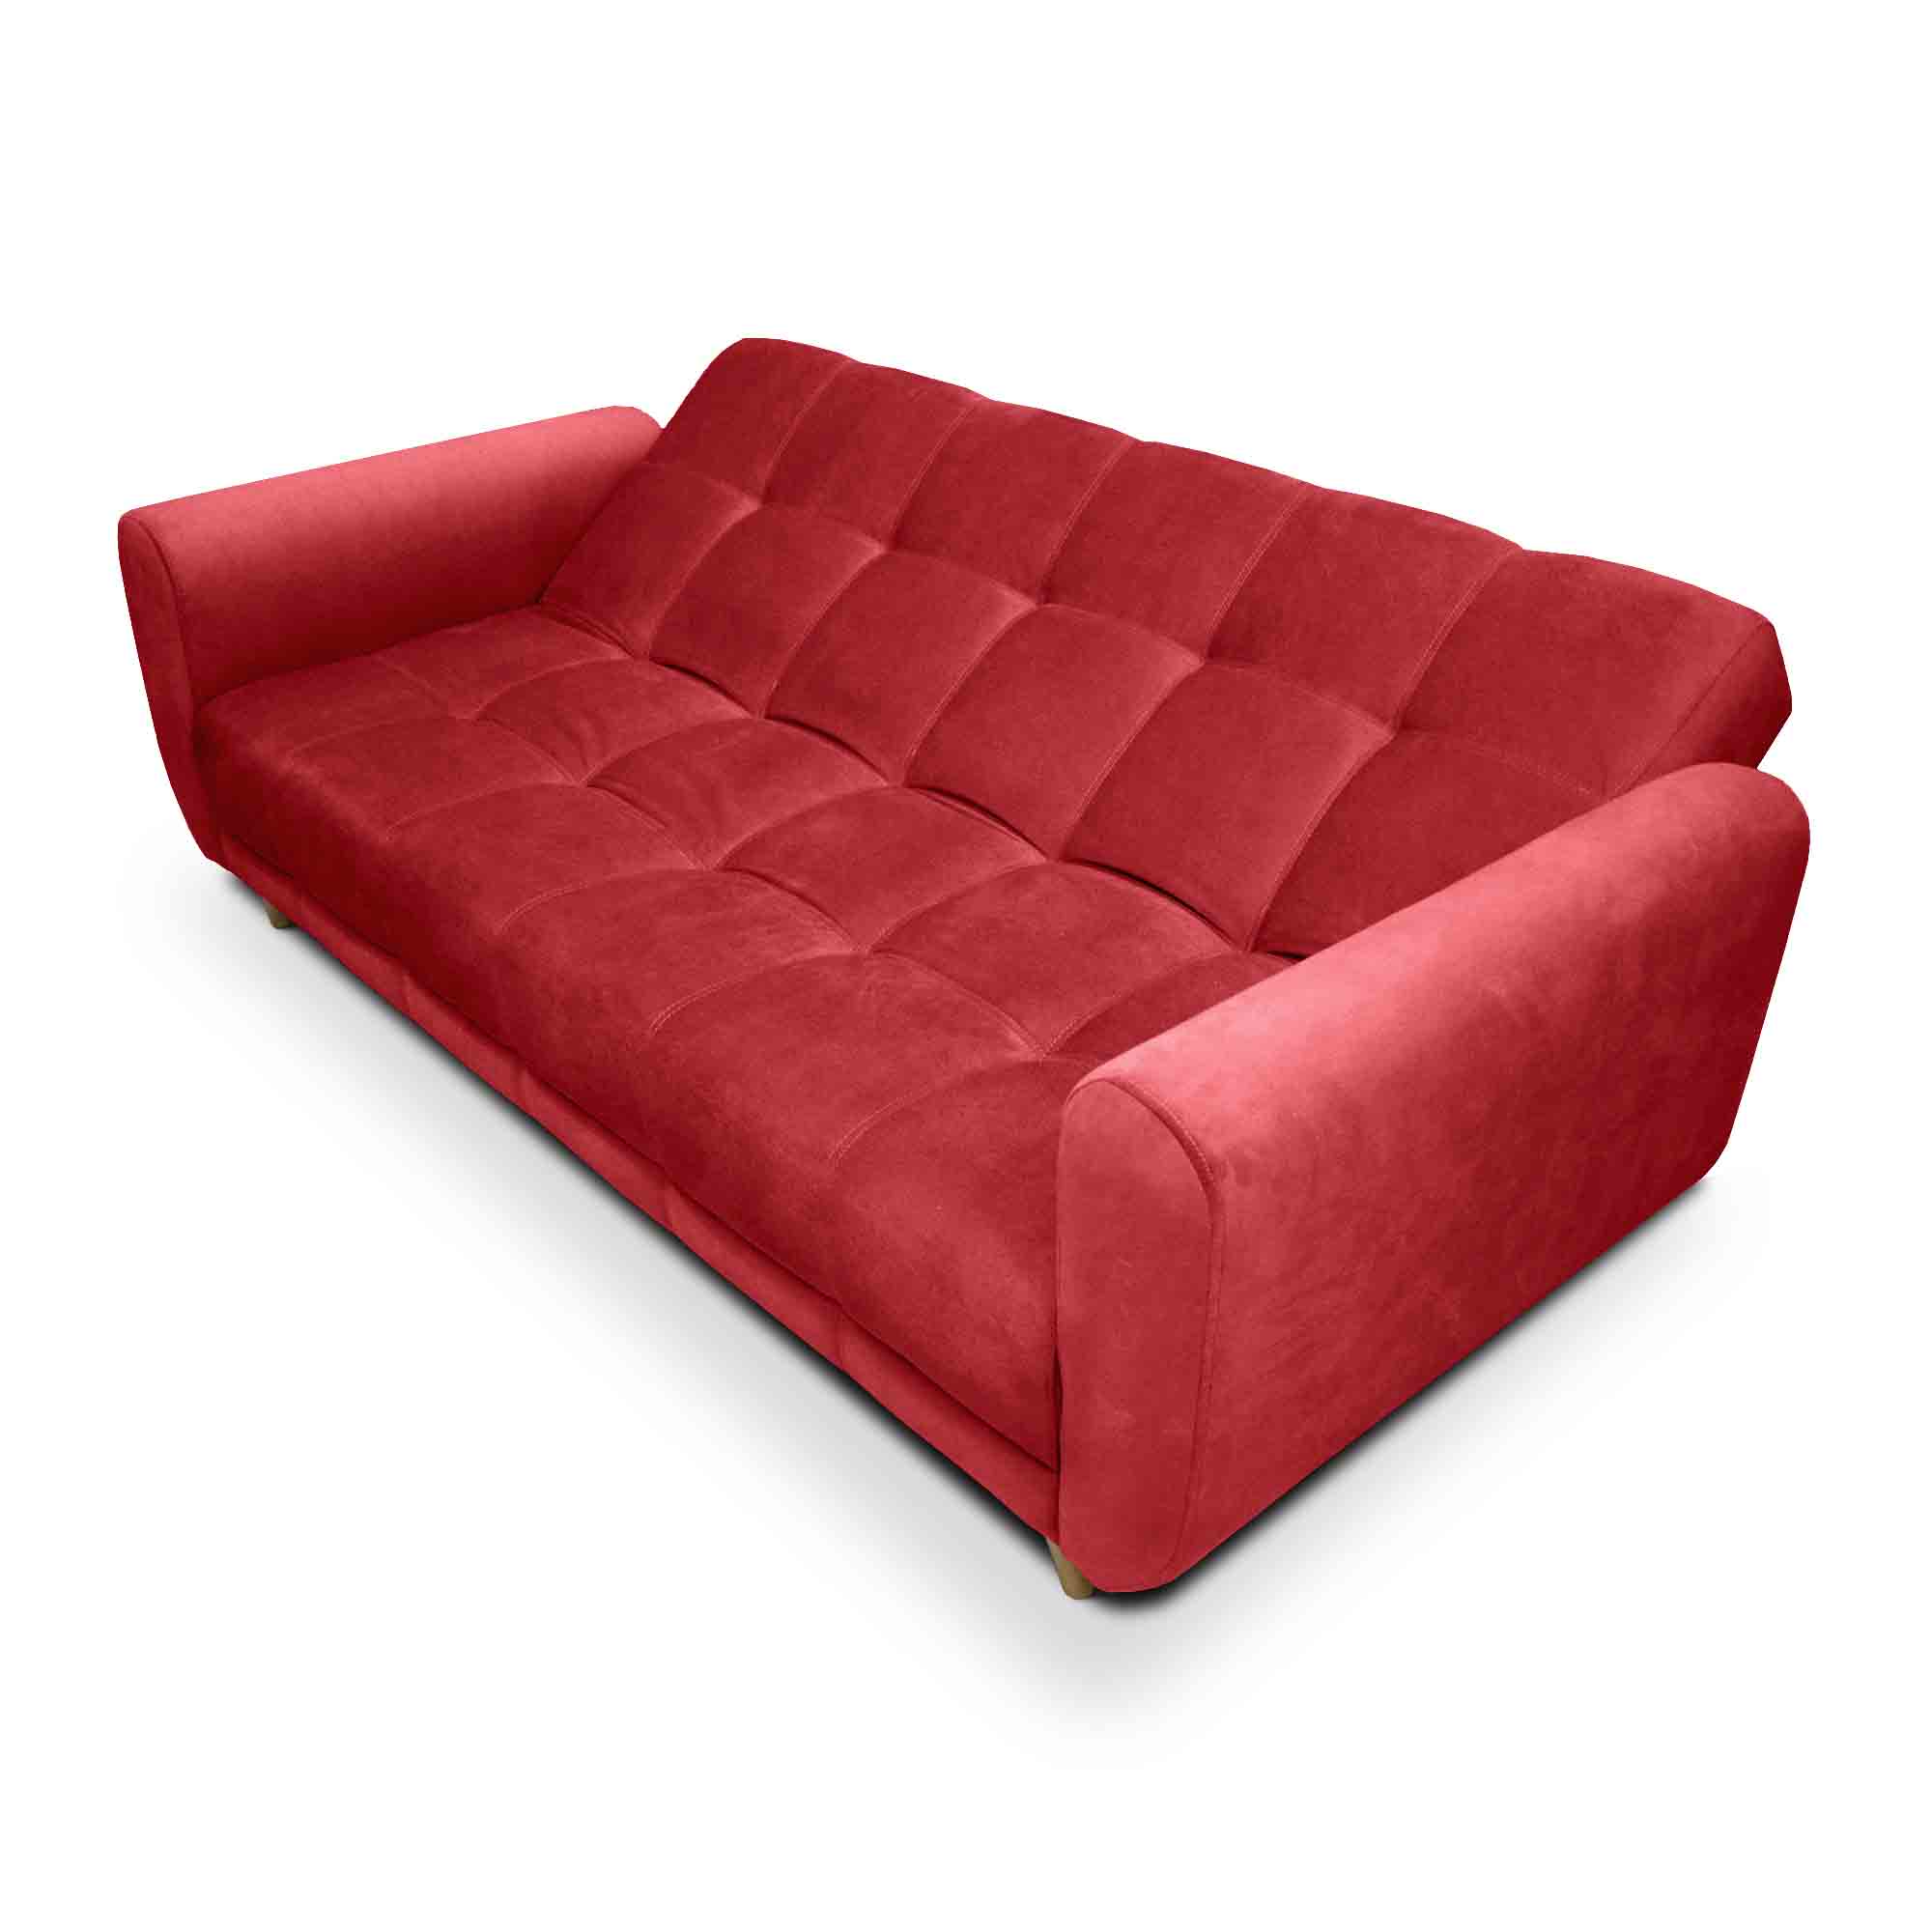 Sofa Cama Comfort Sistema Clic Clac Color Rojo (4)